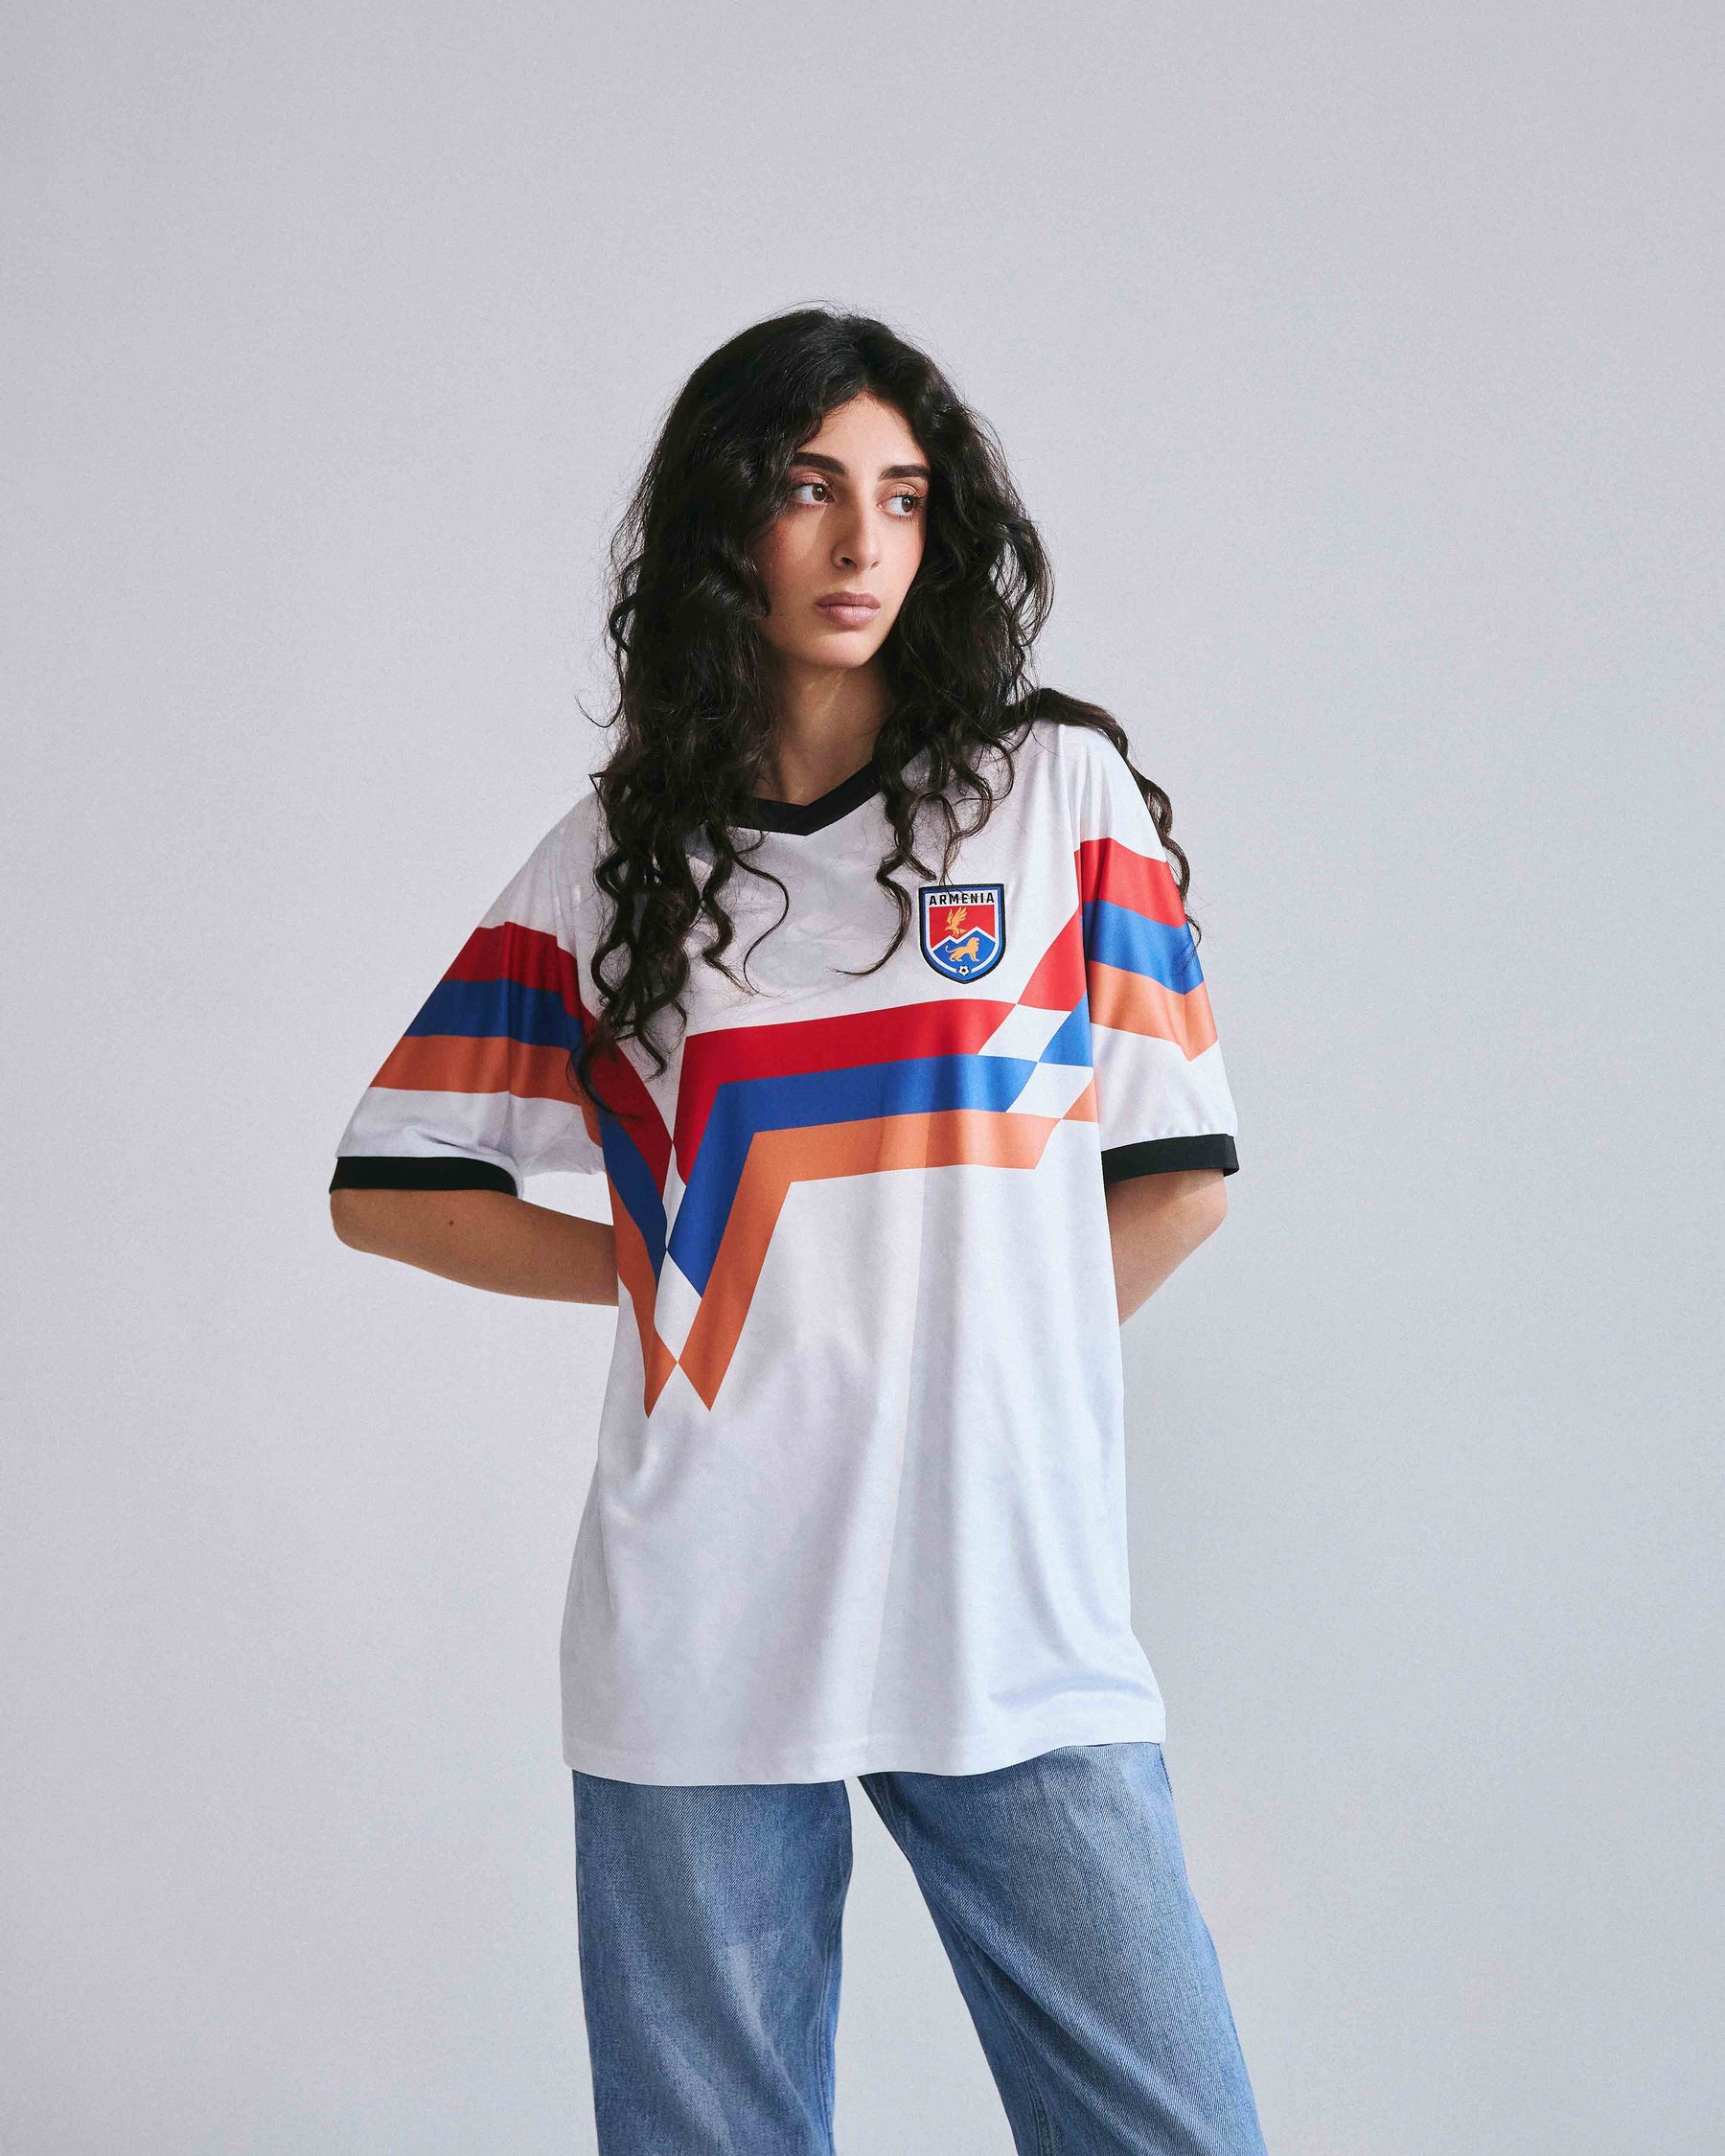 90s Armenia Football Soccer Concept Shirt